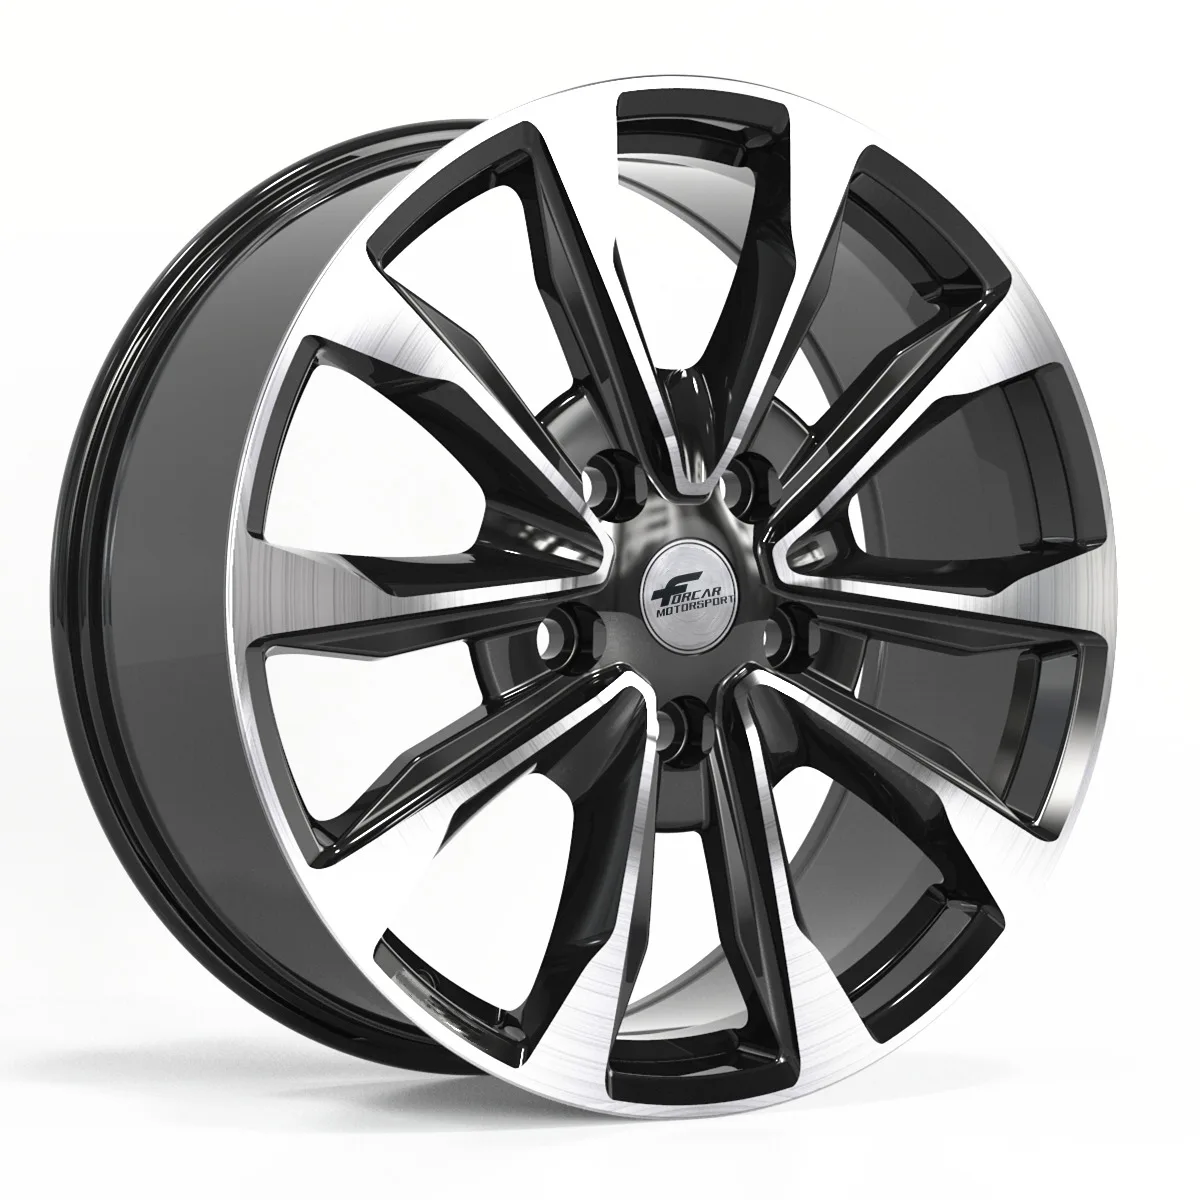 

2021 New Design Alloy Wheel Rims Original Wheels for Japan car